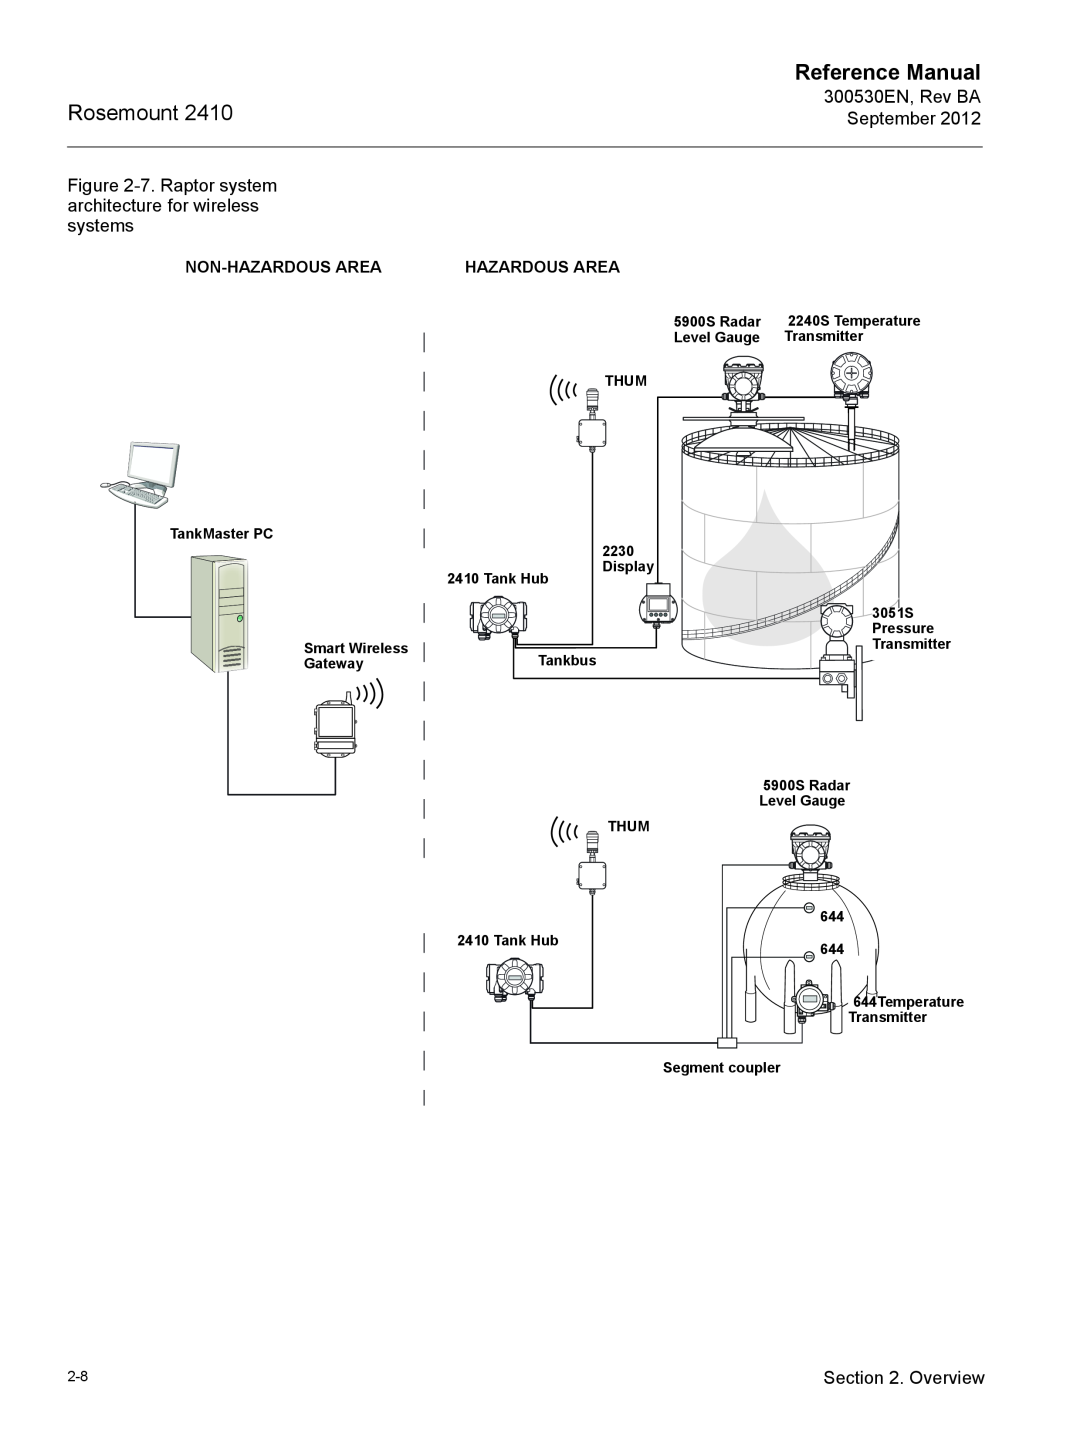 Emerson Process Management Rosemount 2410 manual Reference Manual, Non-Hazardous Area 